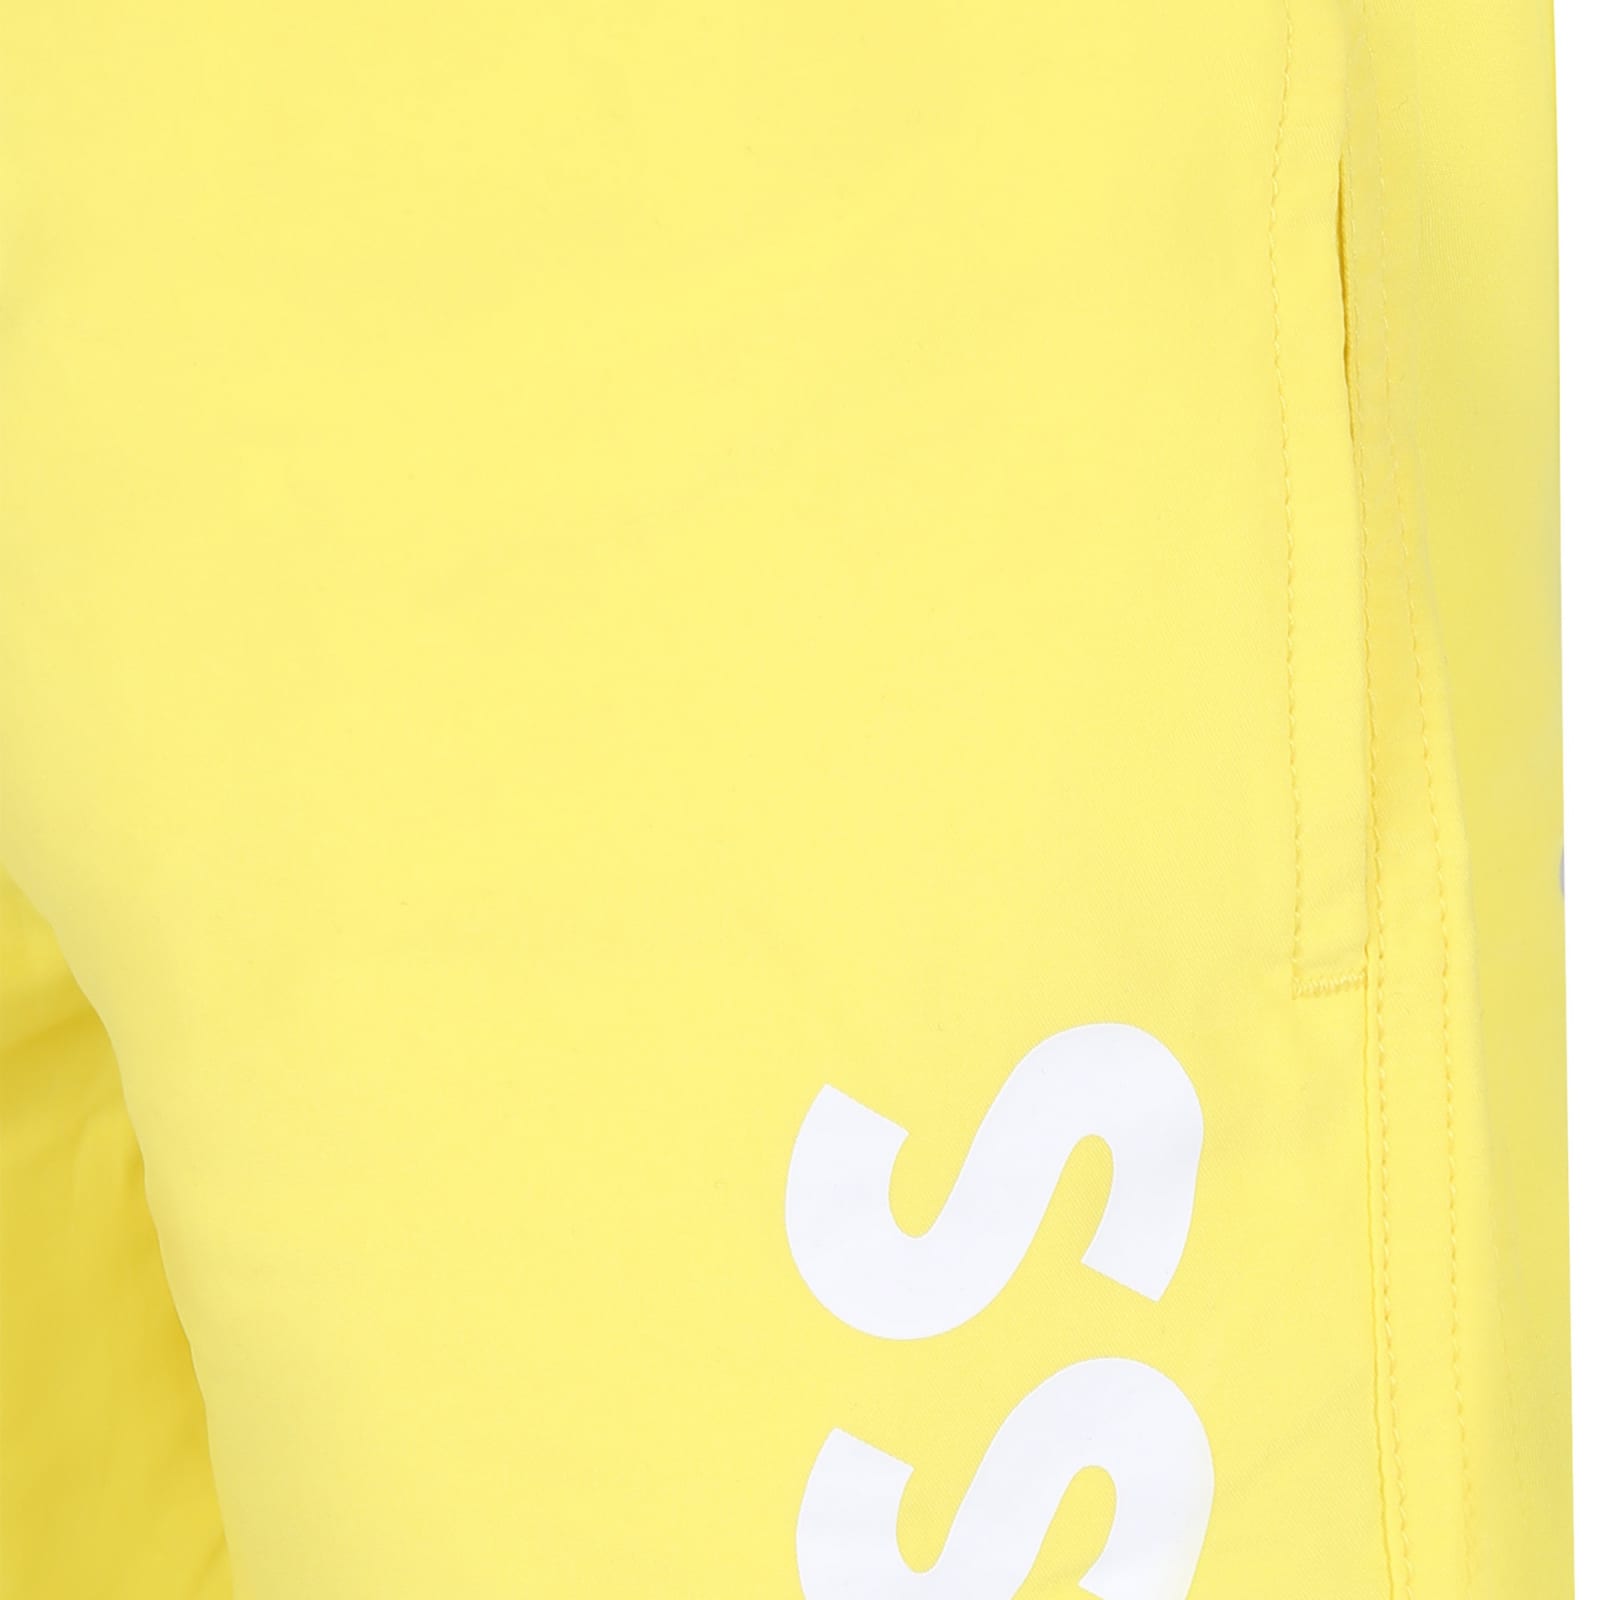 Shop Hugo Boss Yellow Swim Shorts For Boy With Logo